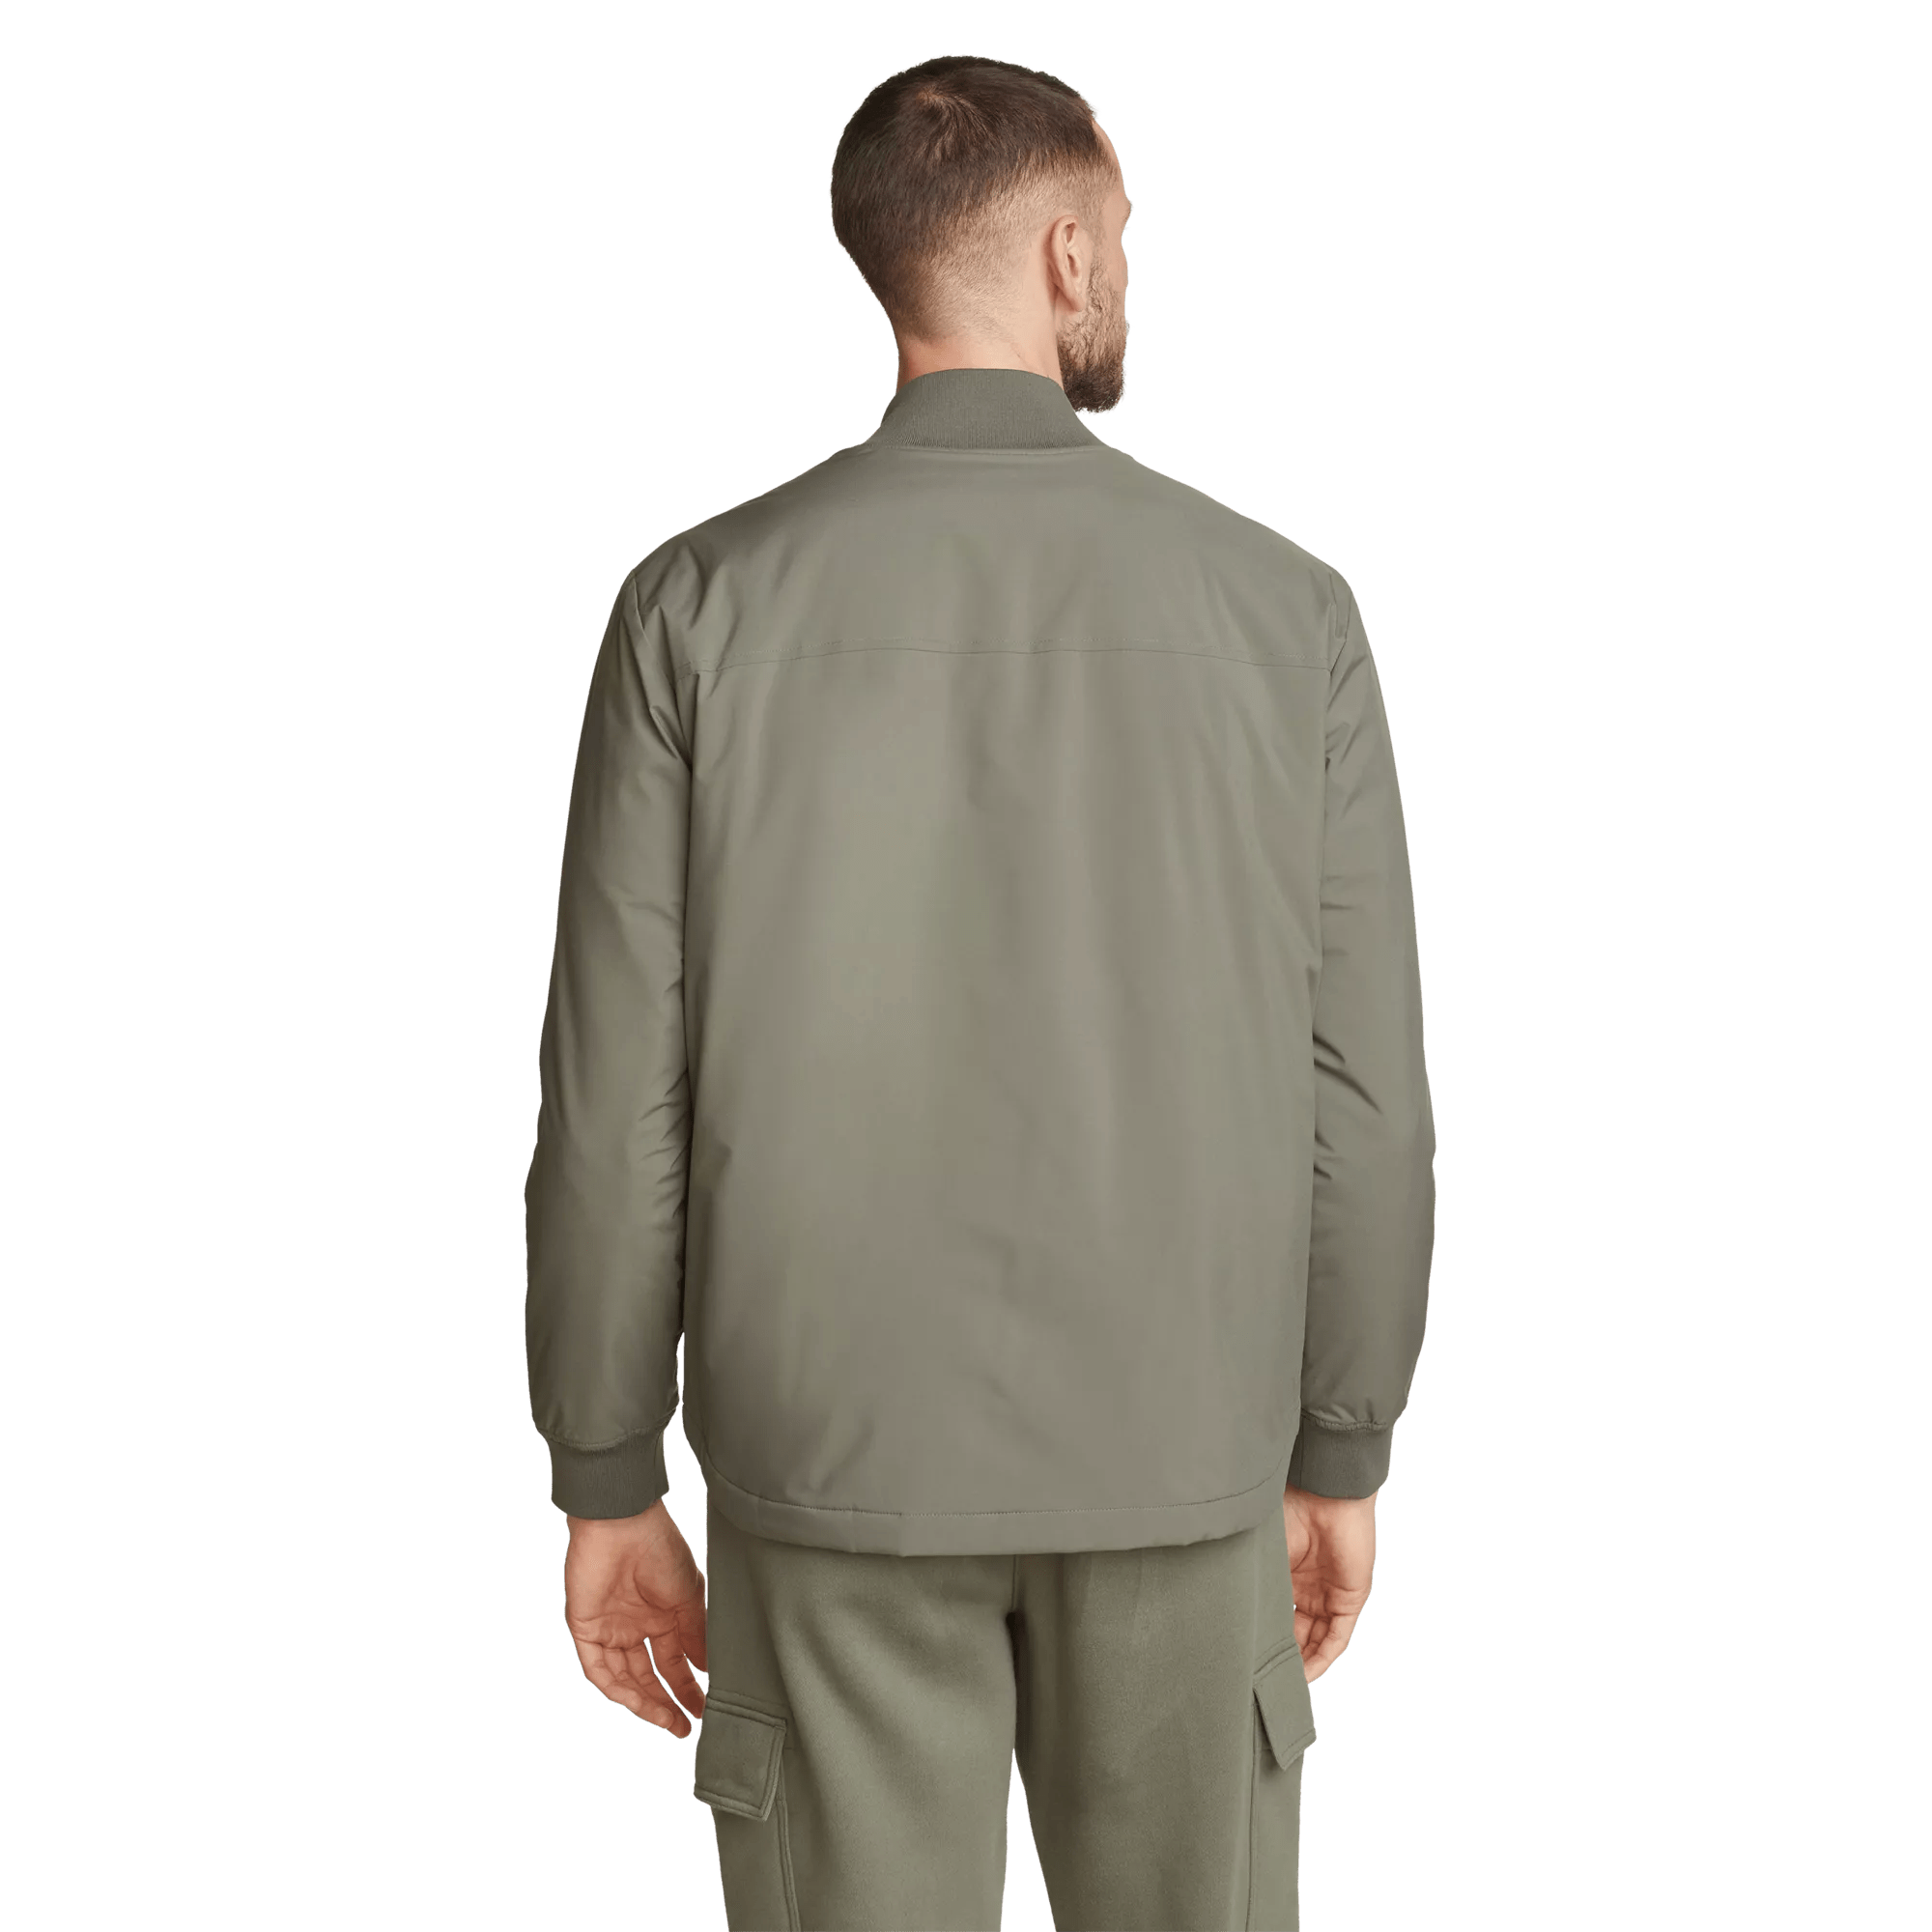 Colemont Insulated Jacket